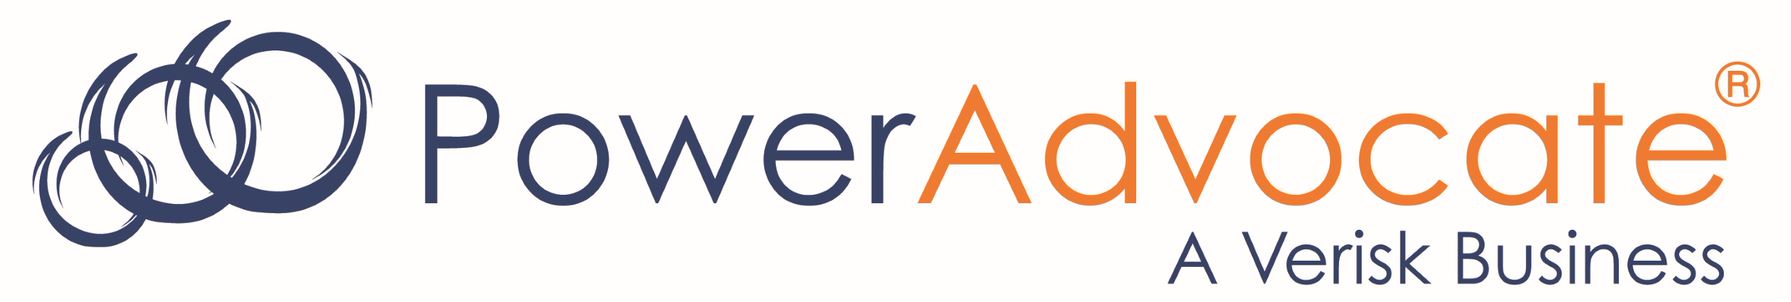 poweradvocate logo